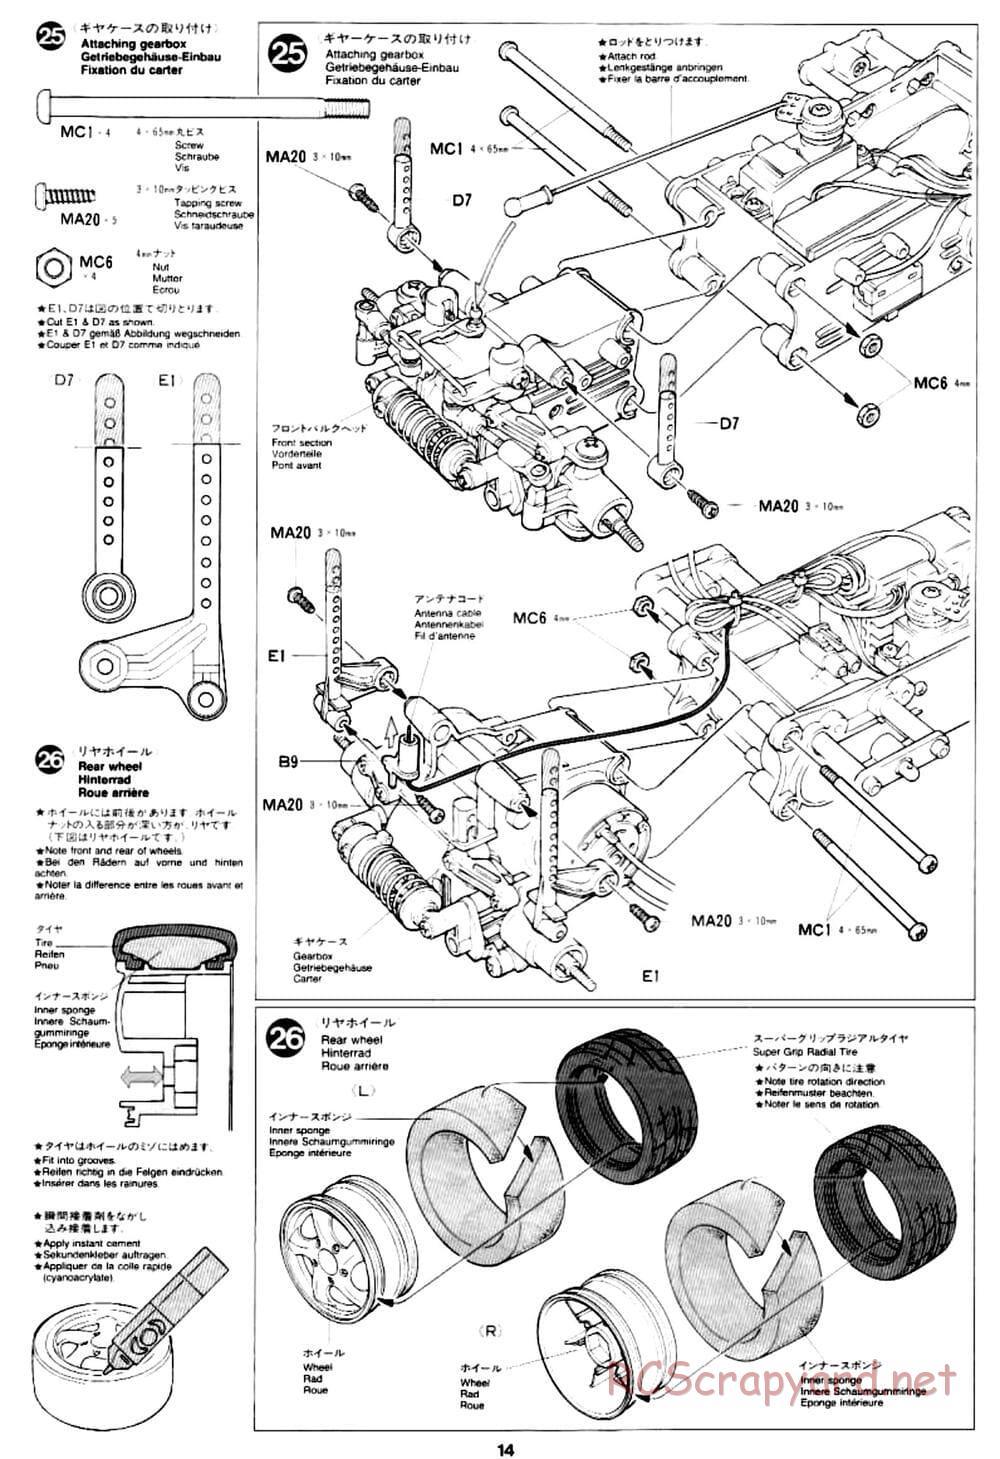 Tamiya - Porsche 911 Carrera - M02L Chassis - Manual - Page 14